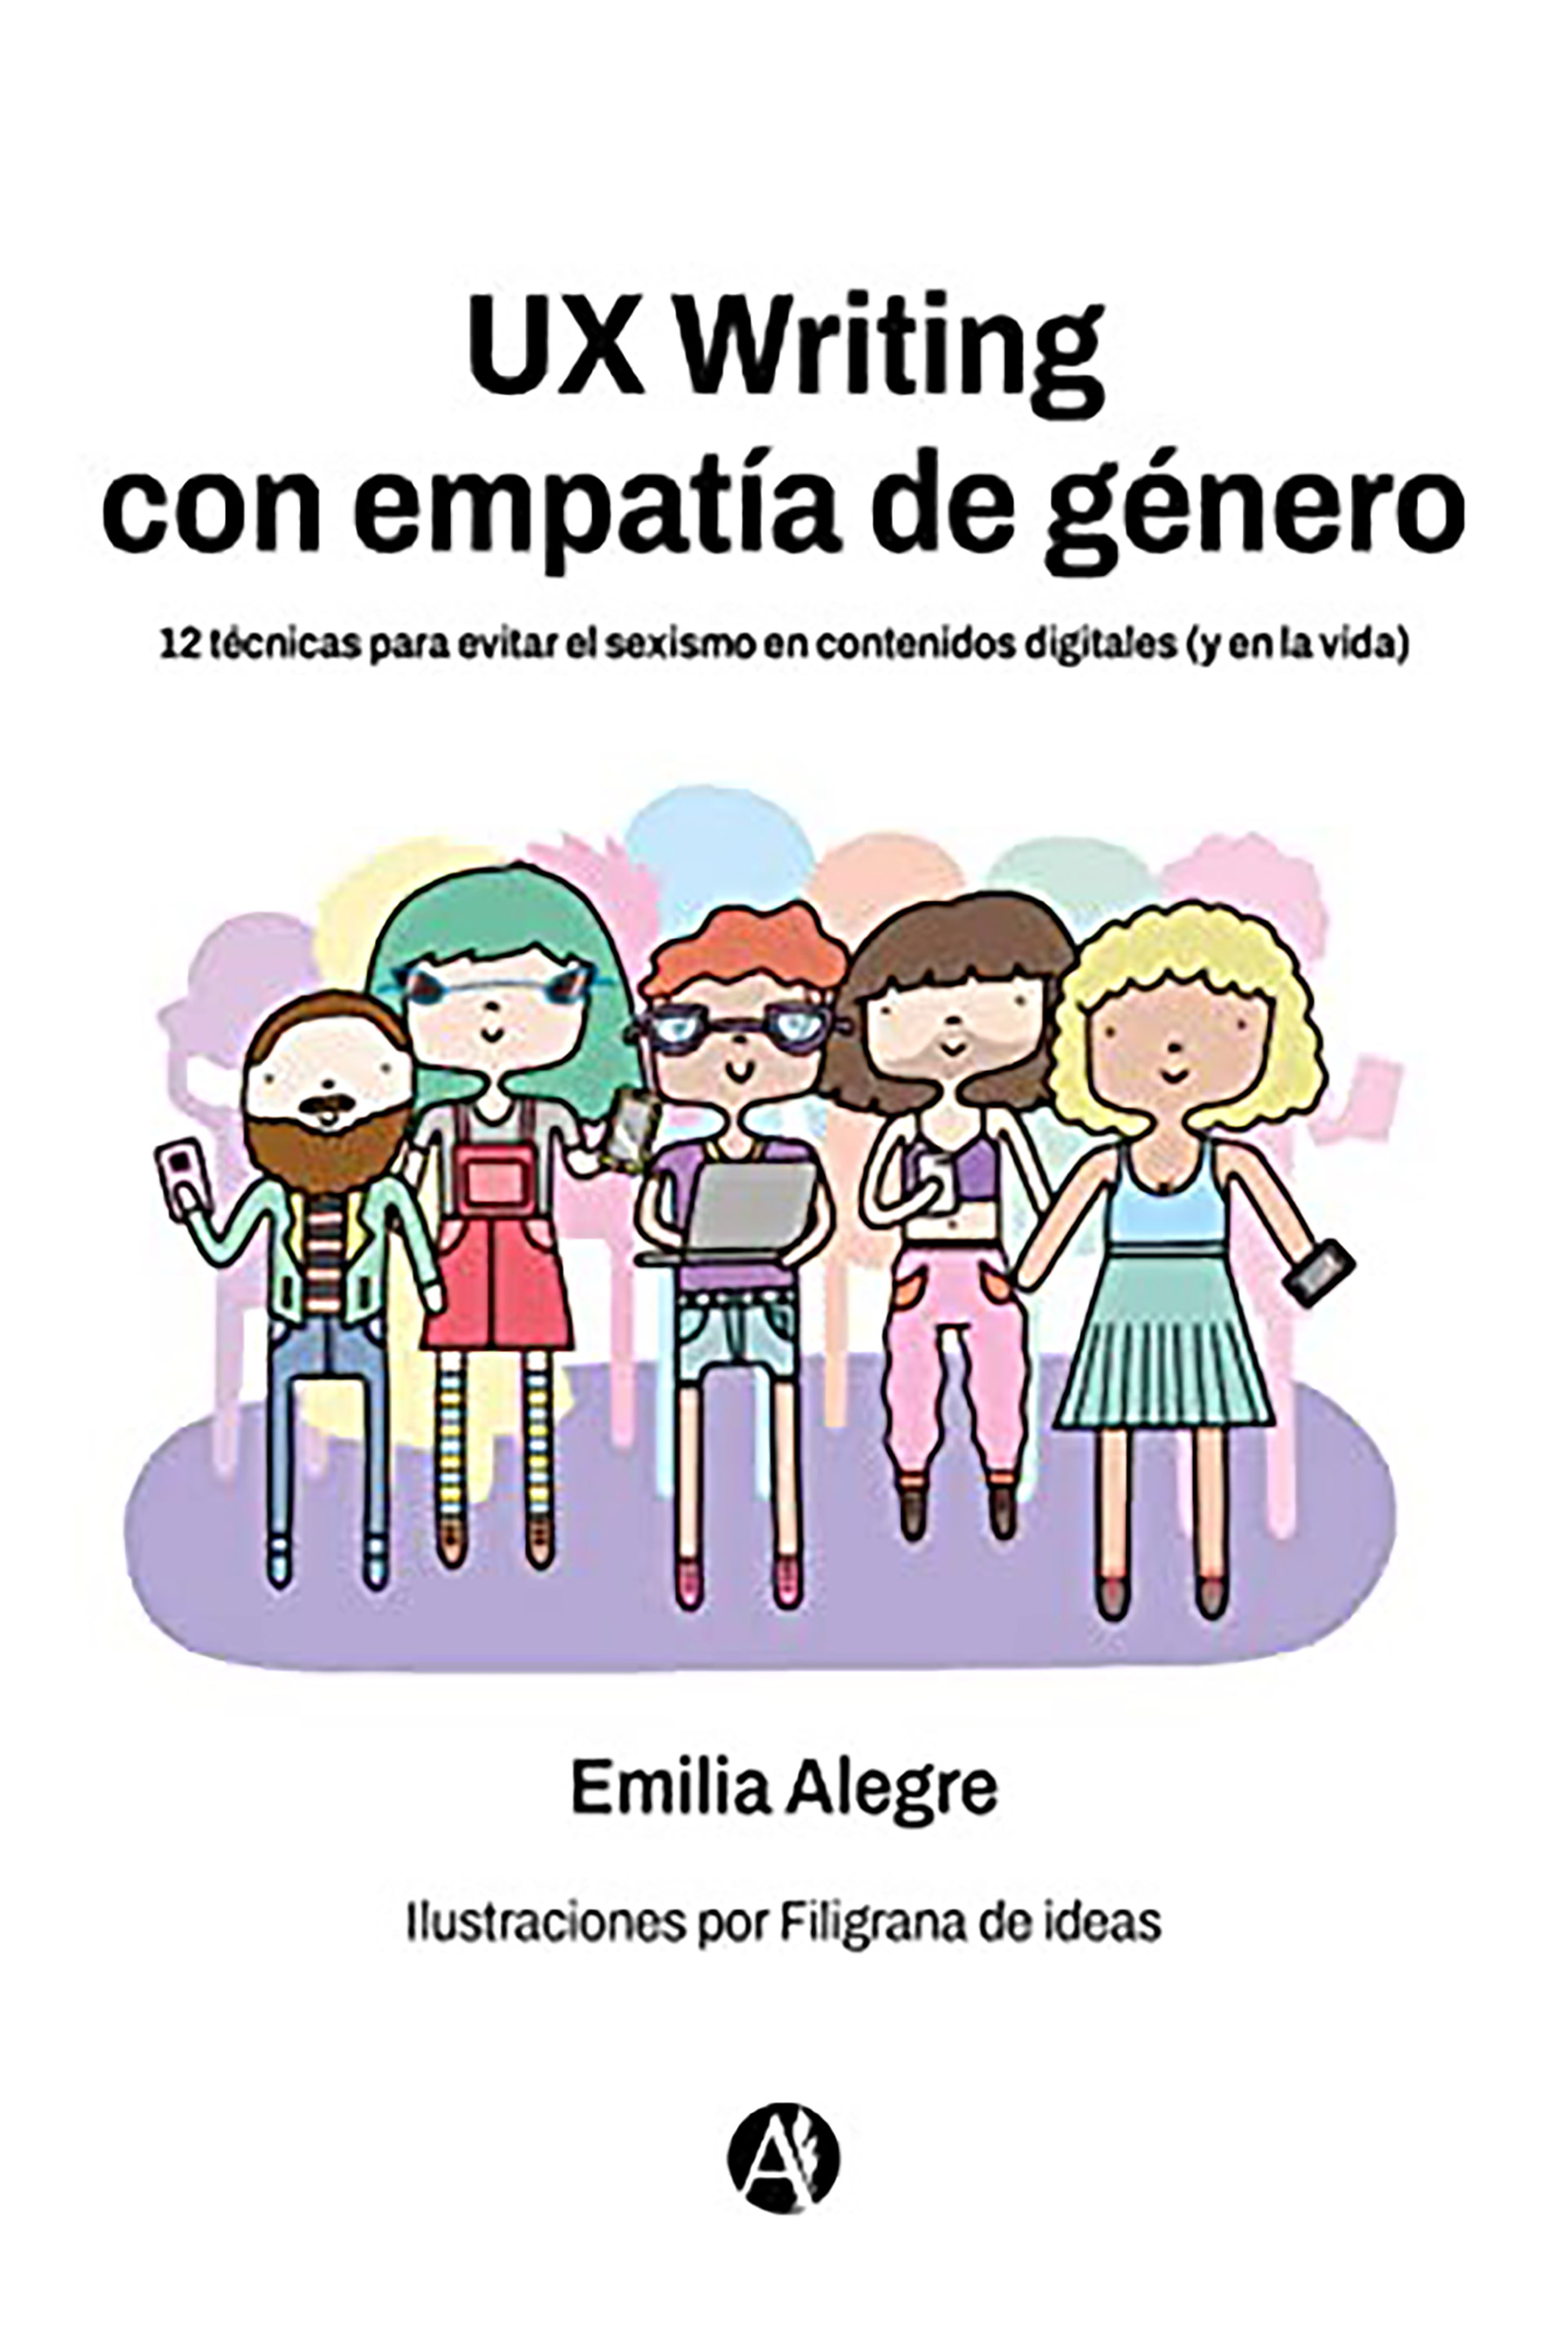 "UX Writing con empatía de género", de Emilia Alegre